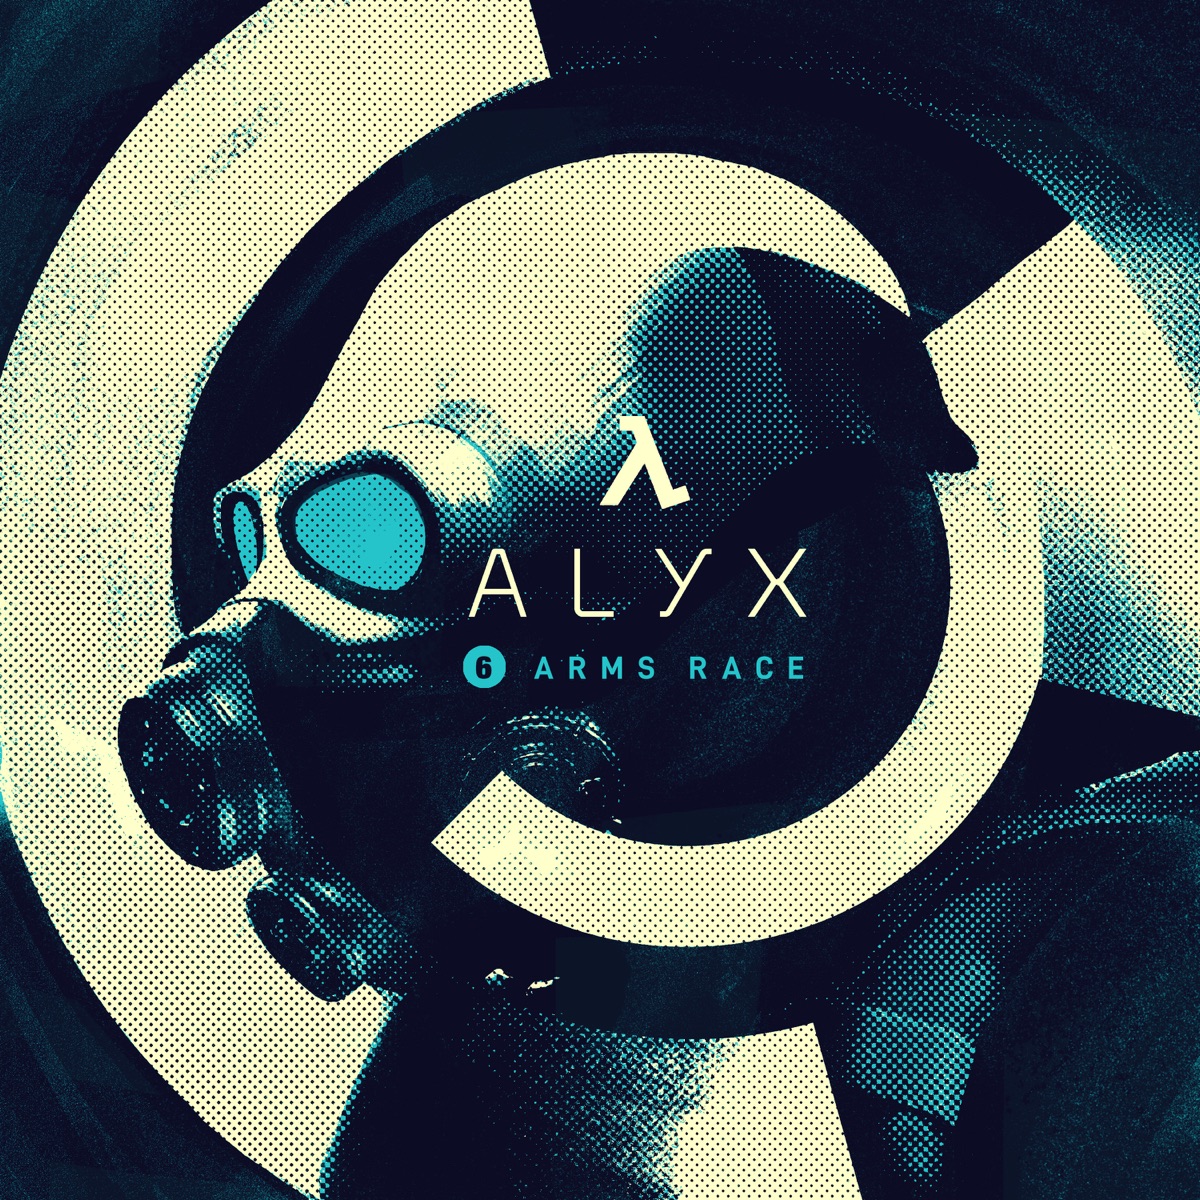 Half-Life: Alyx - Album by Valve - Apple Music